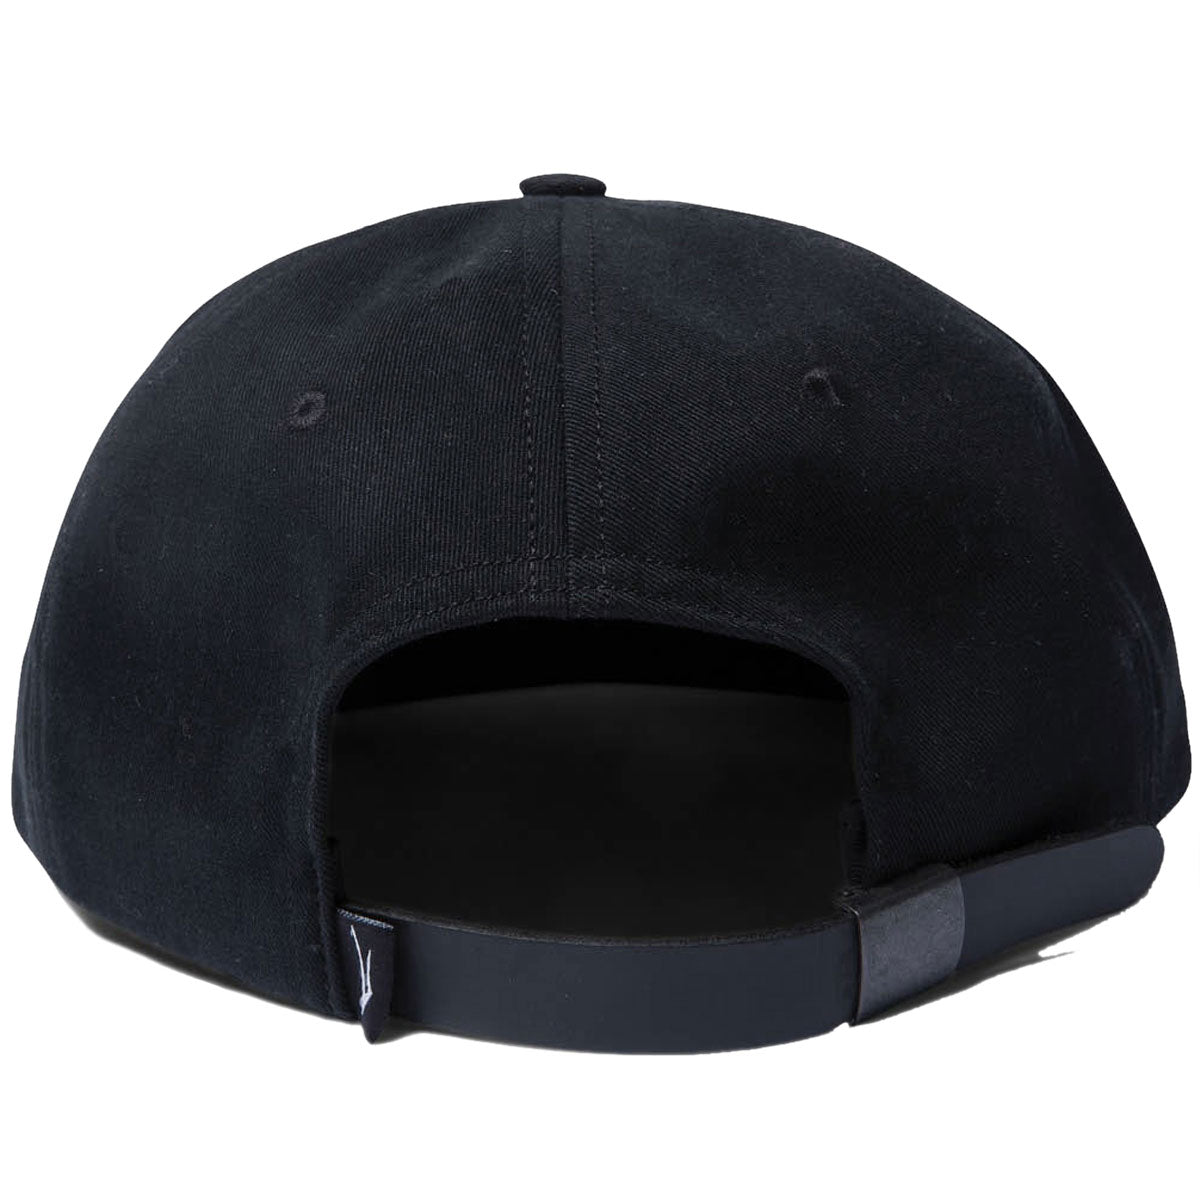 Lakai Fielder Snapback Hat - Black image 2